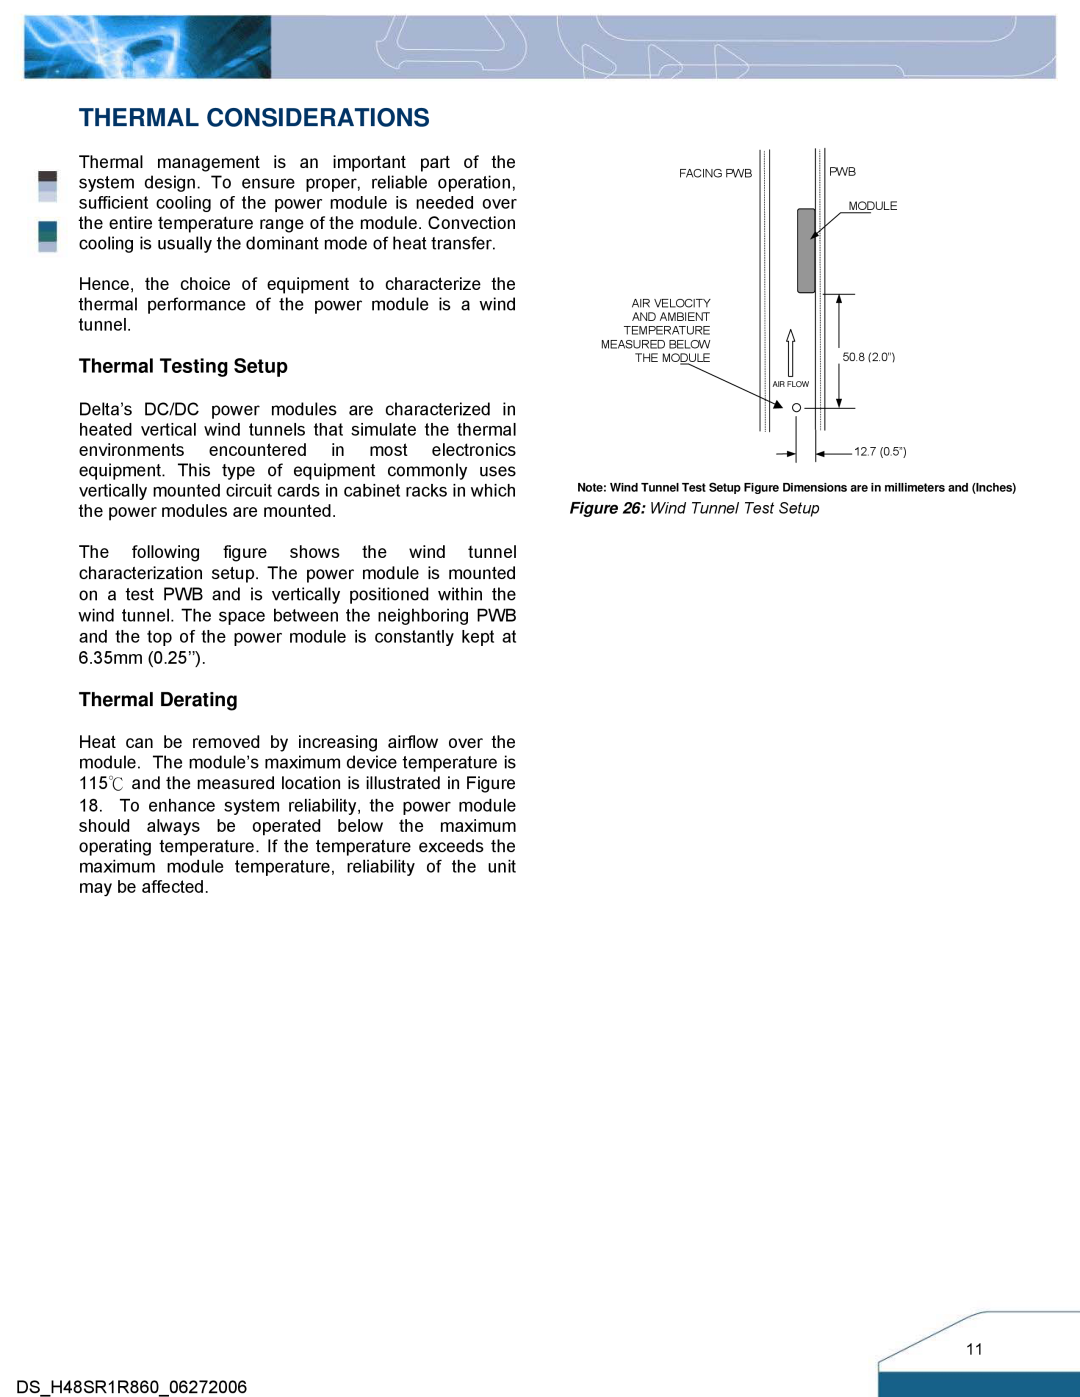 Delta Electronics Series H48SR manual Thermal Considerations, Thermal Testing Setup, Thermal Derating 